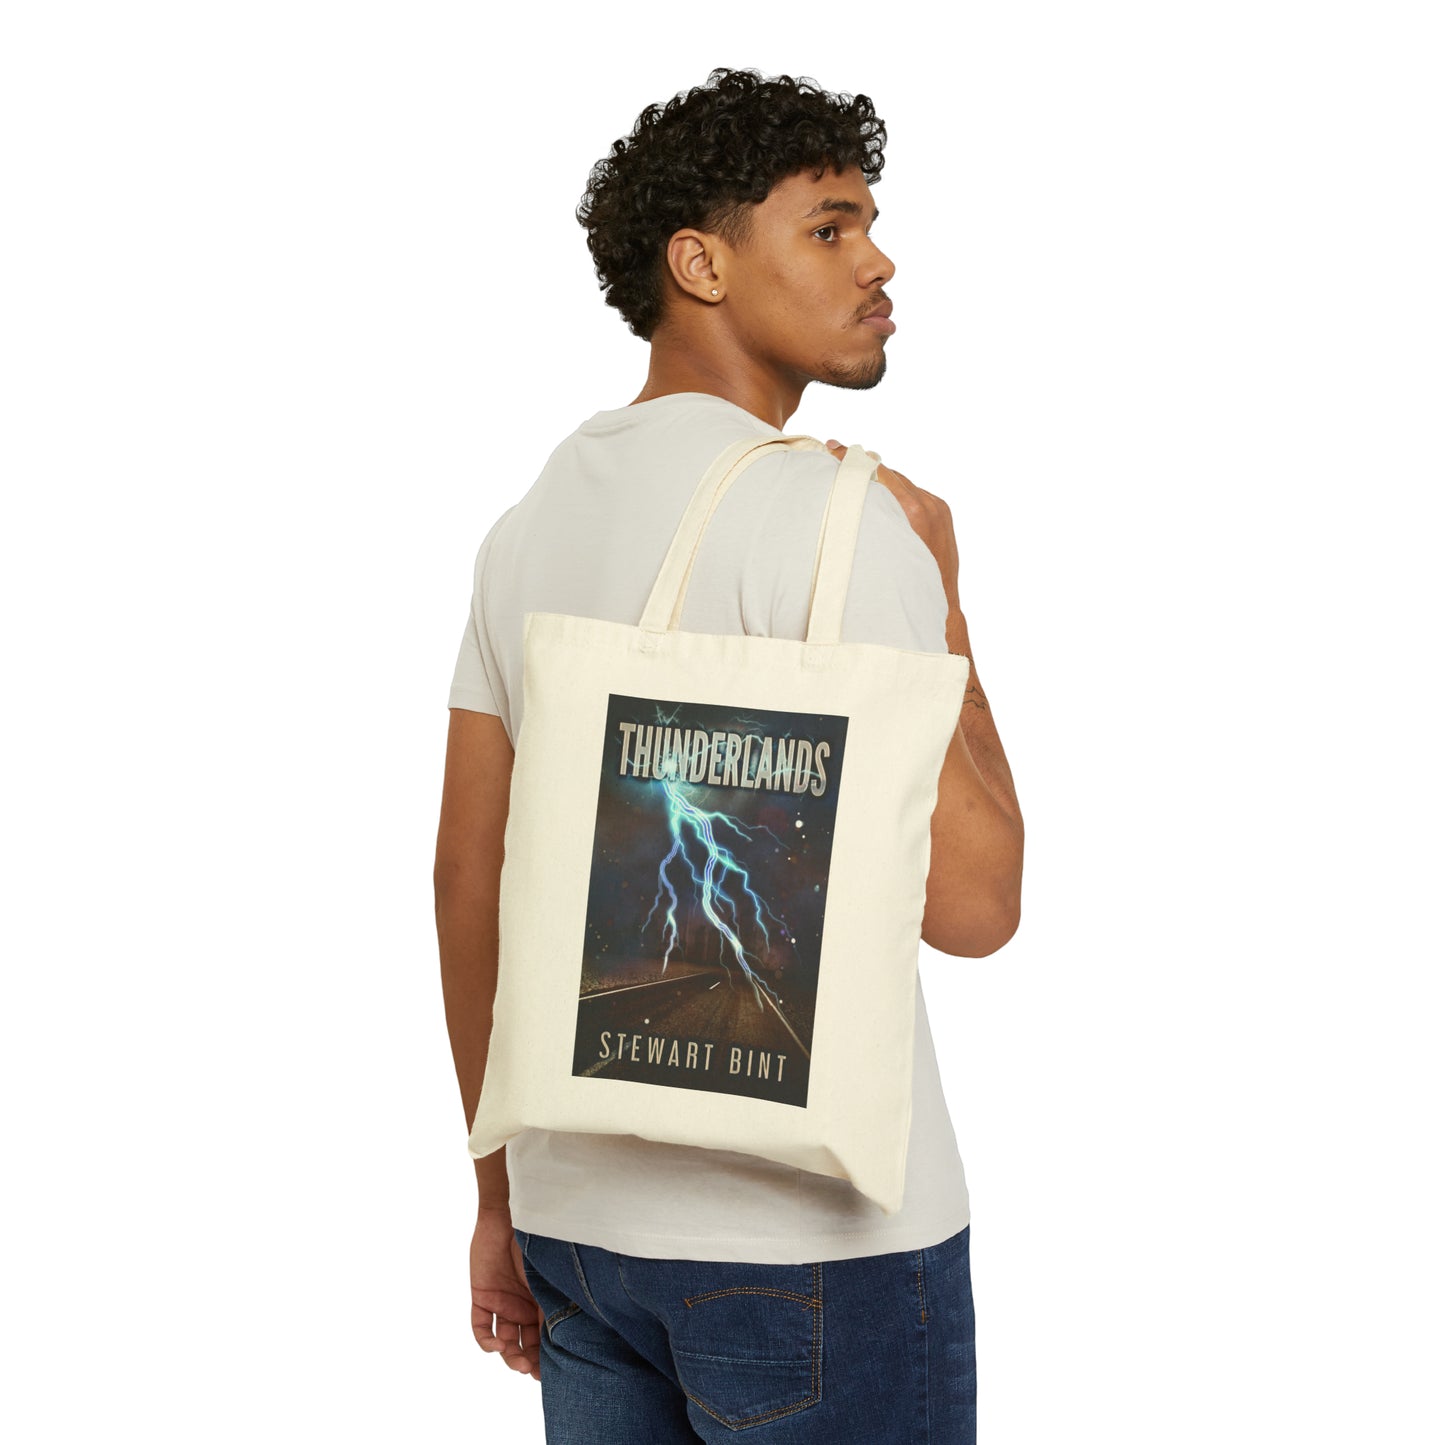 Thunderlands - Cotton Canvas Tote Bag